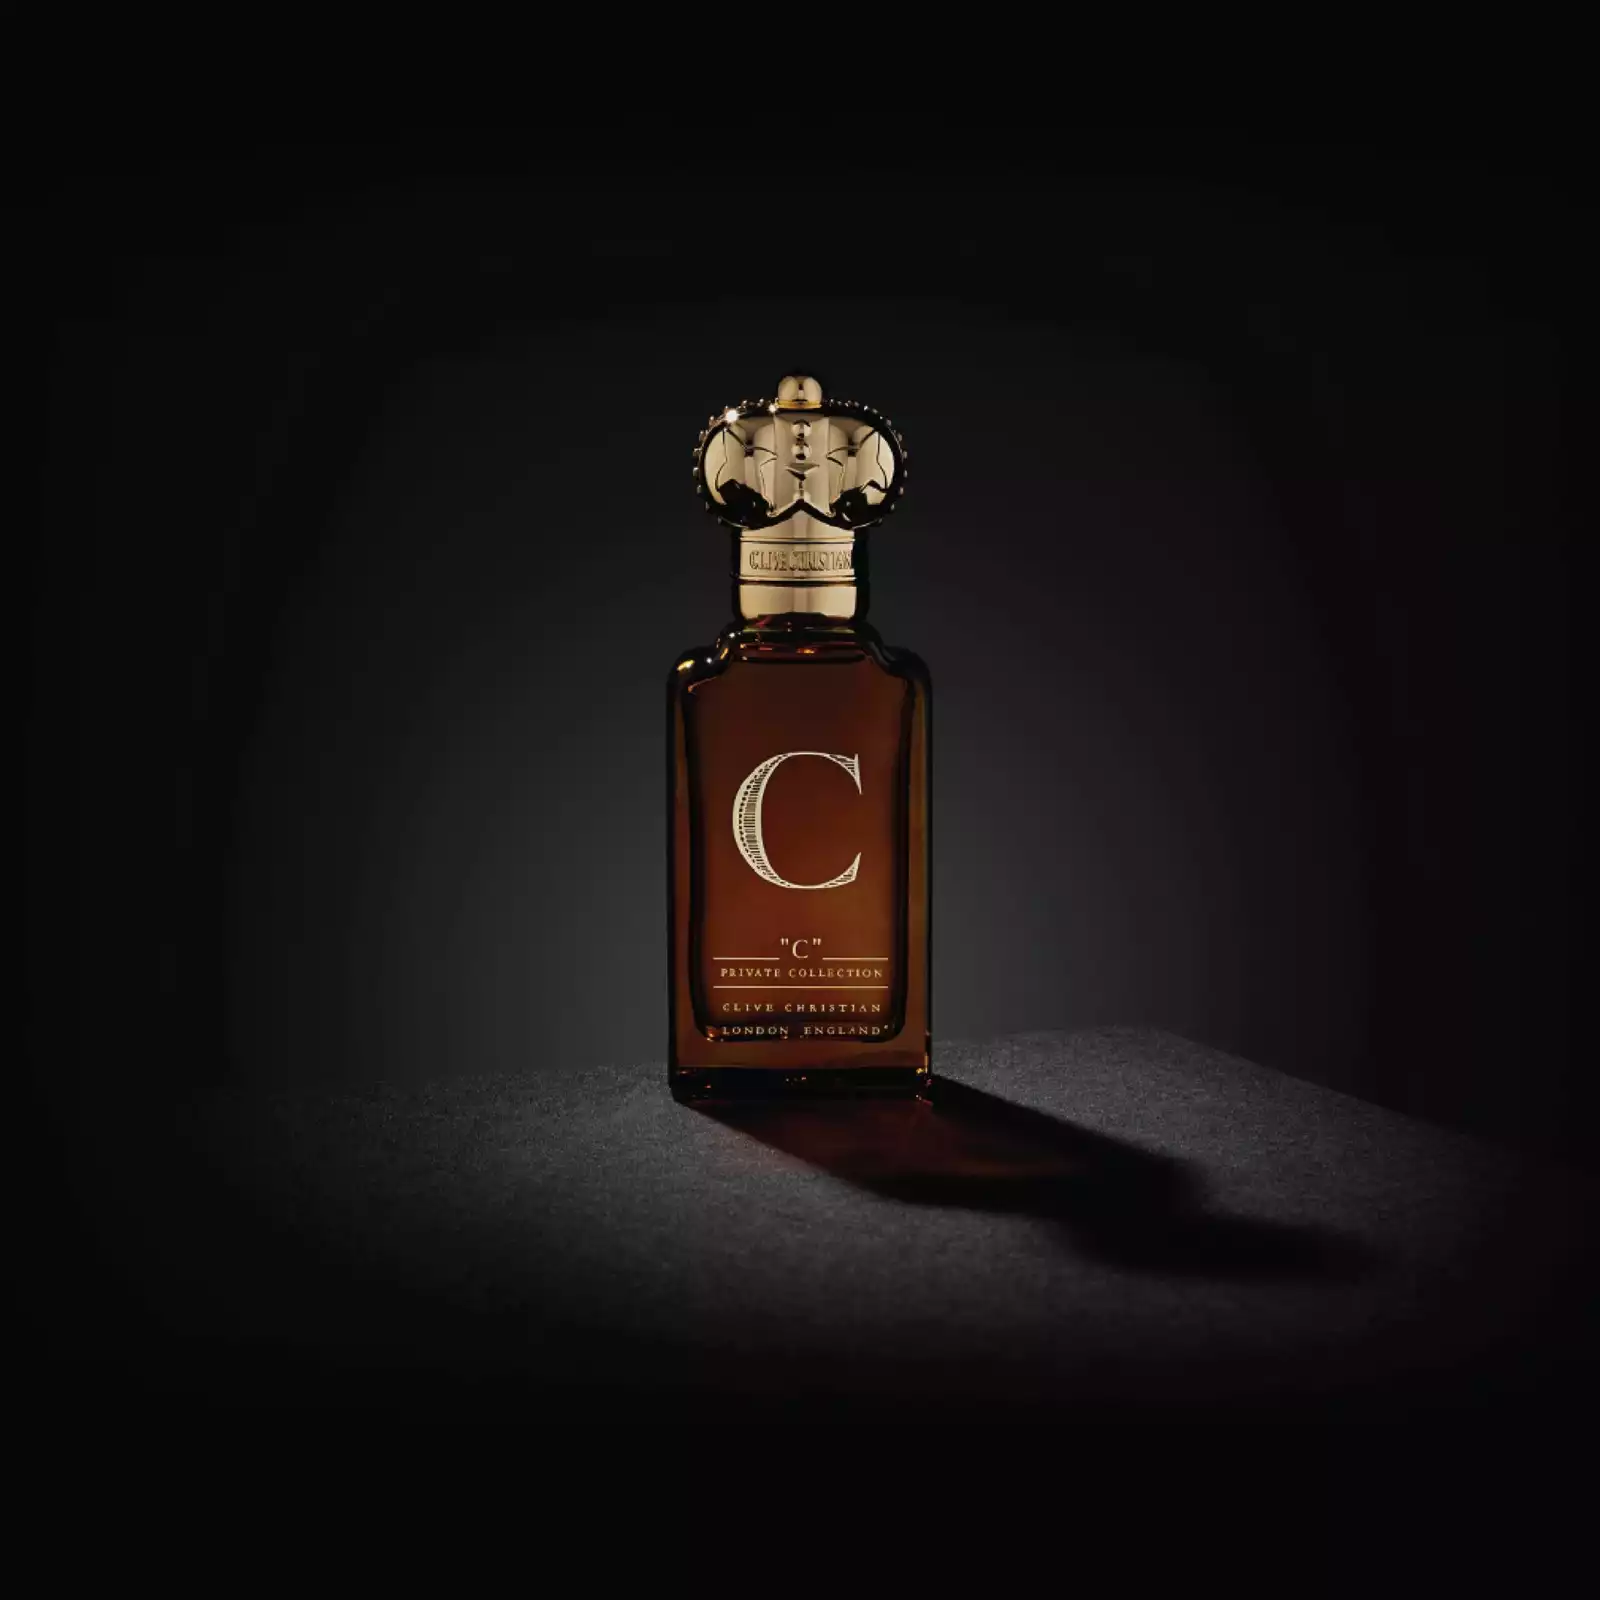 C, Private Collection, ženski parfum